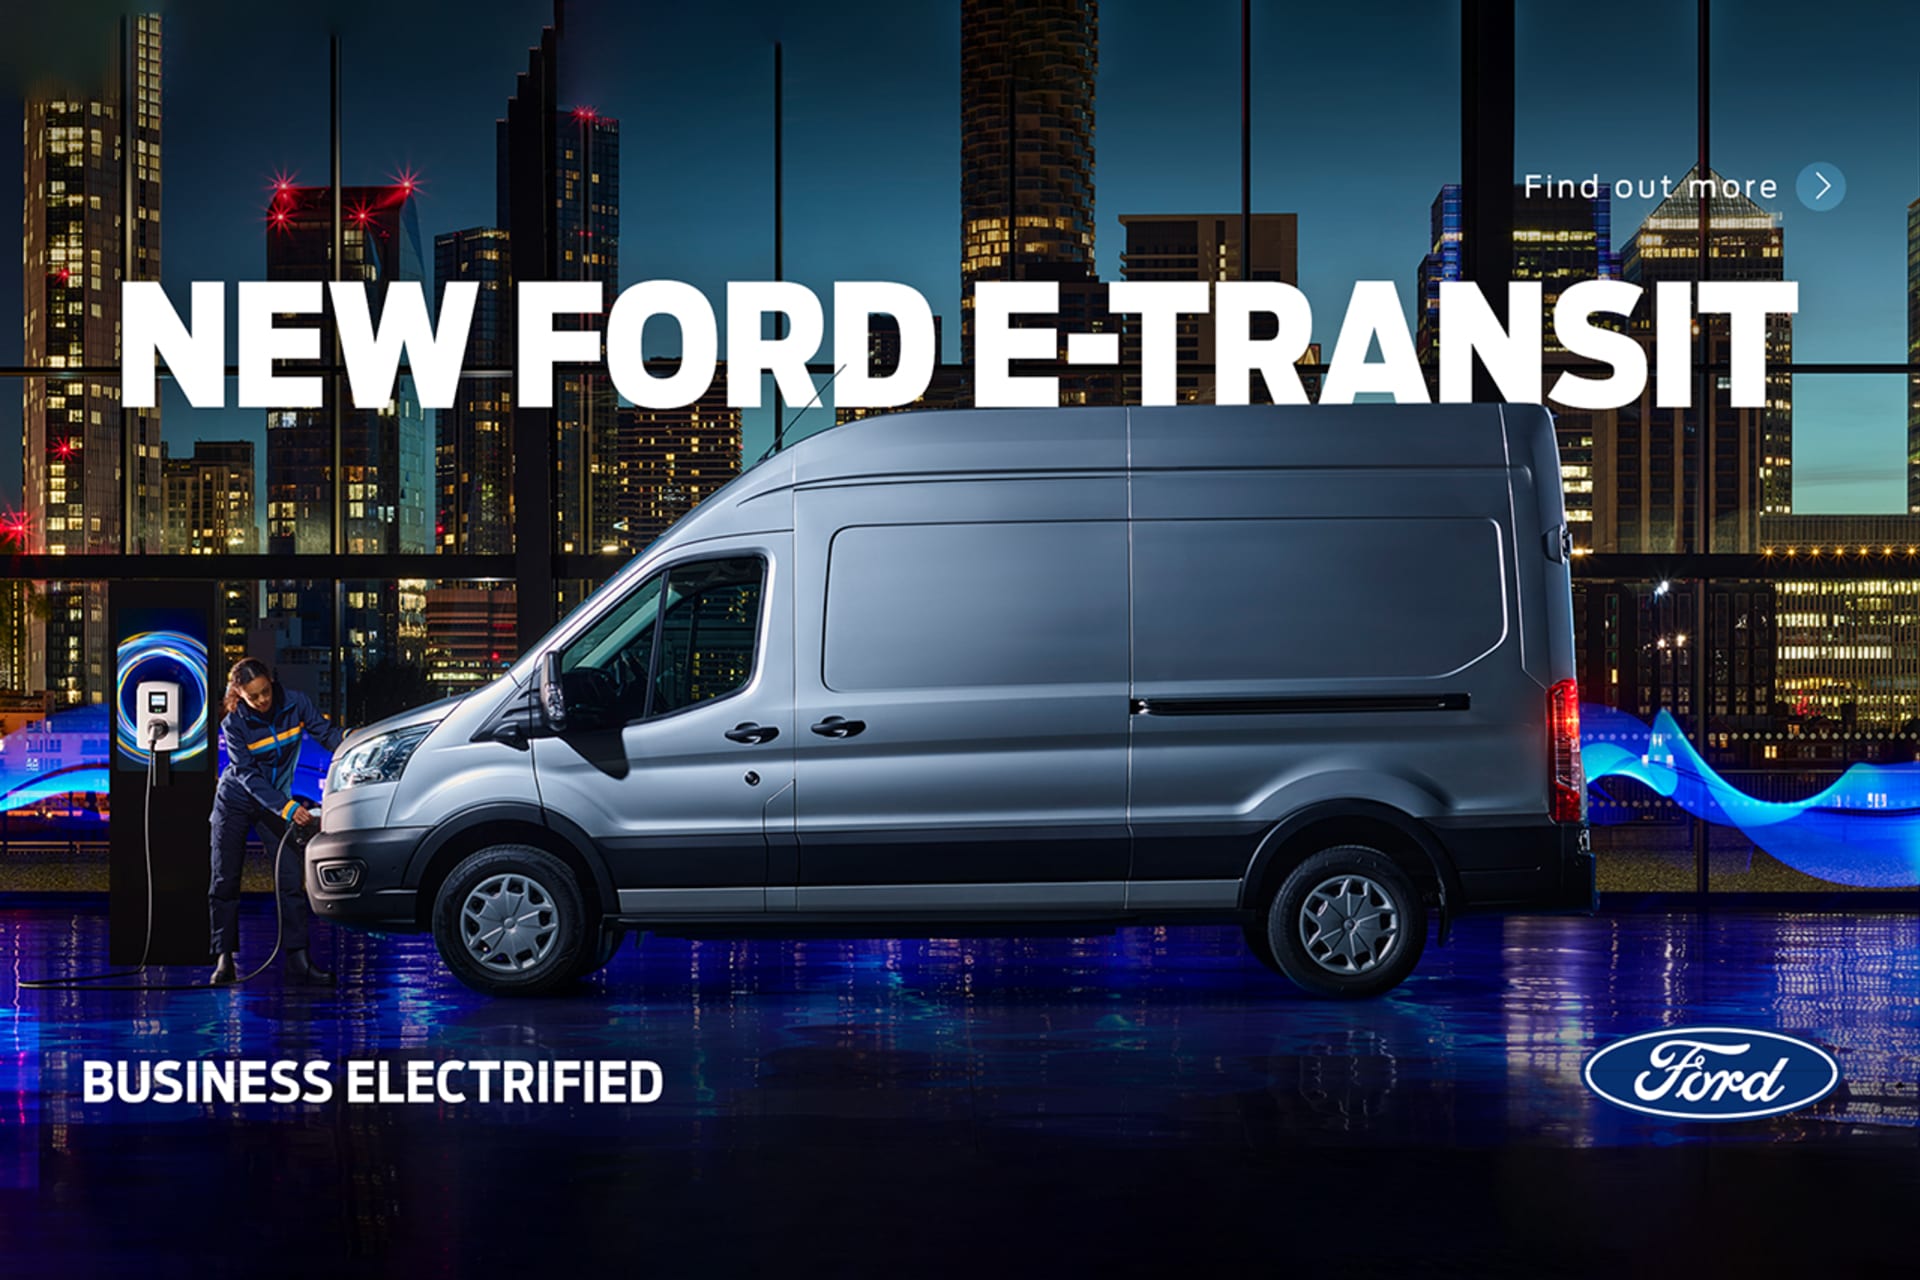 New Ford E-Transit